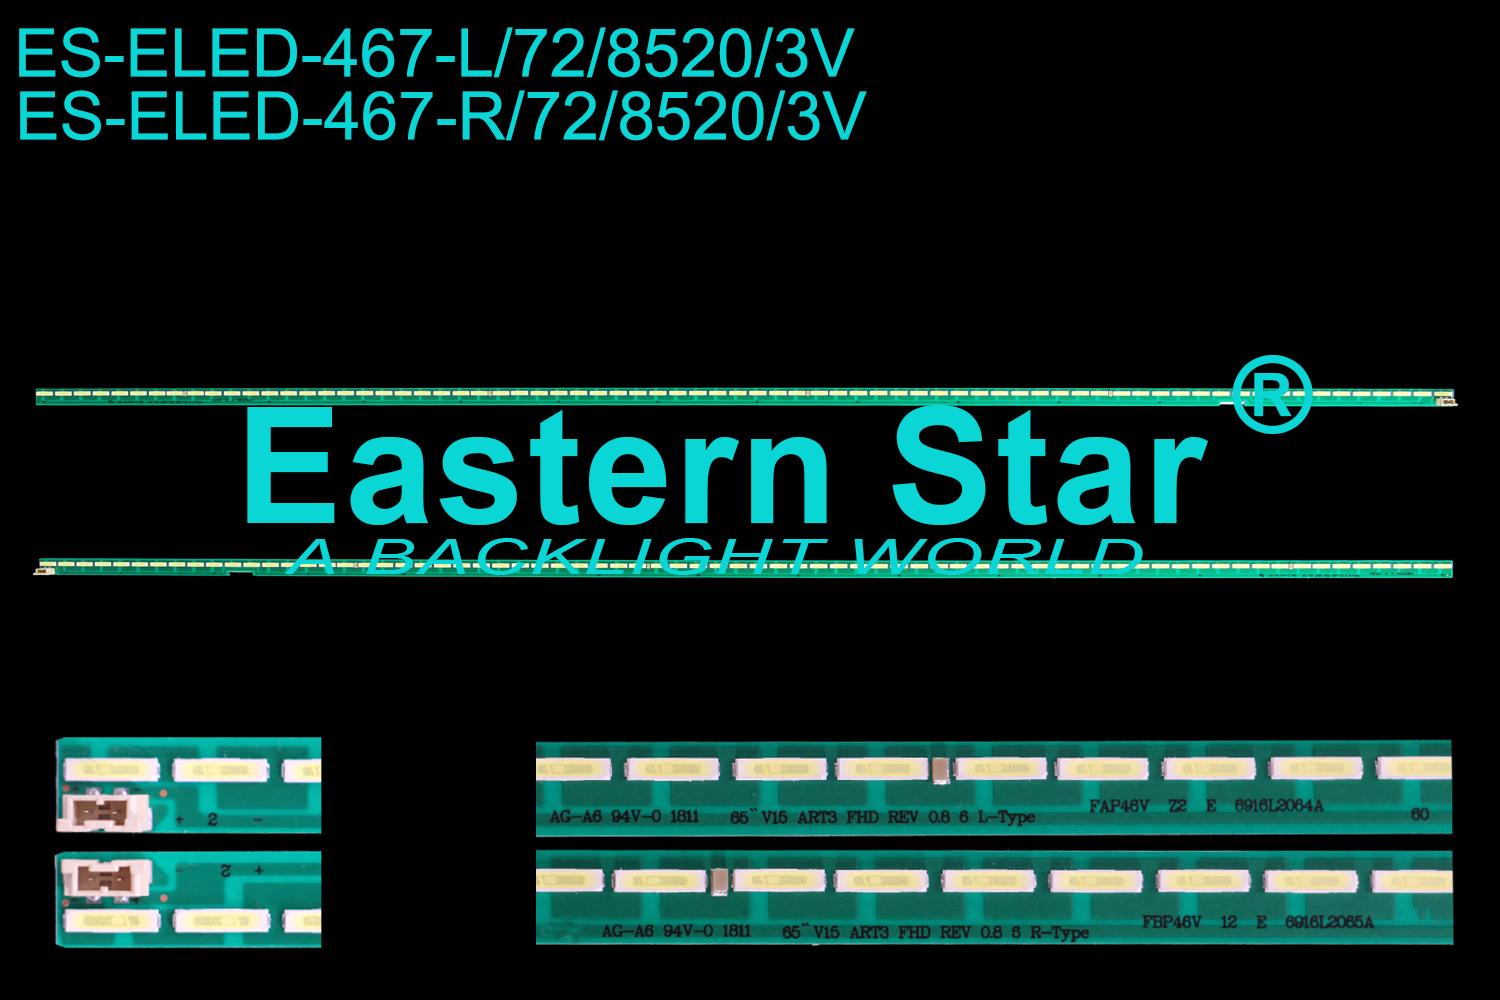 ES-ELED-467 ELED/EDGE TV backlight use for 65'' Lg L/R:65"  V15 ART3 FHD REV 0.8 6 L/R-TYPE  6916L2064A  LED STRIPS(2）